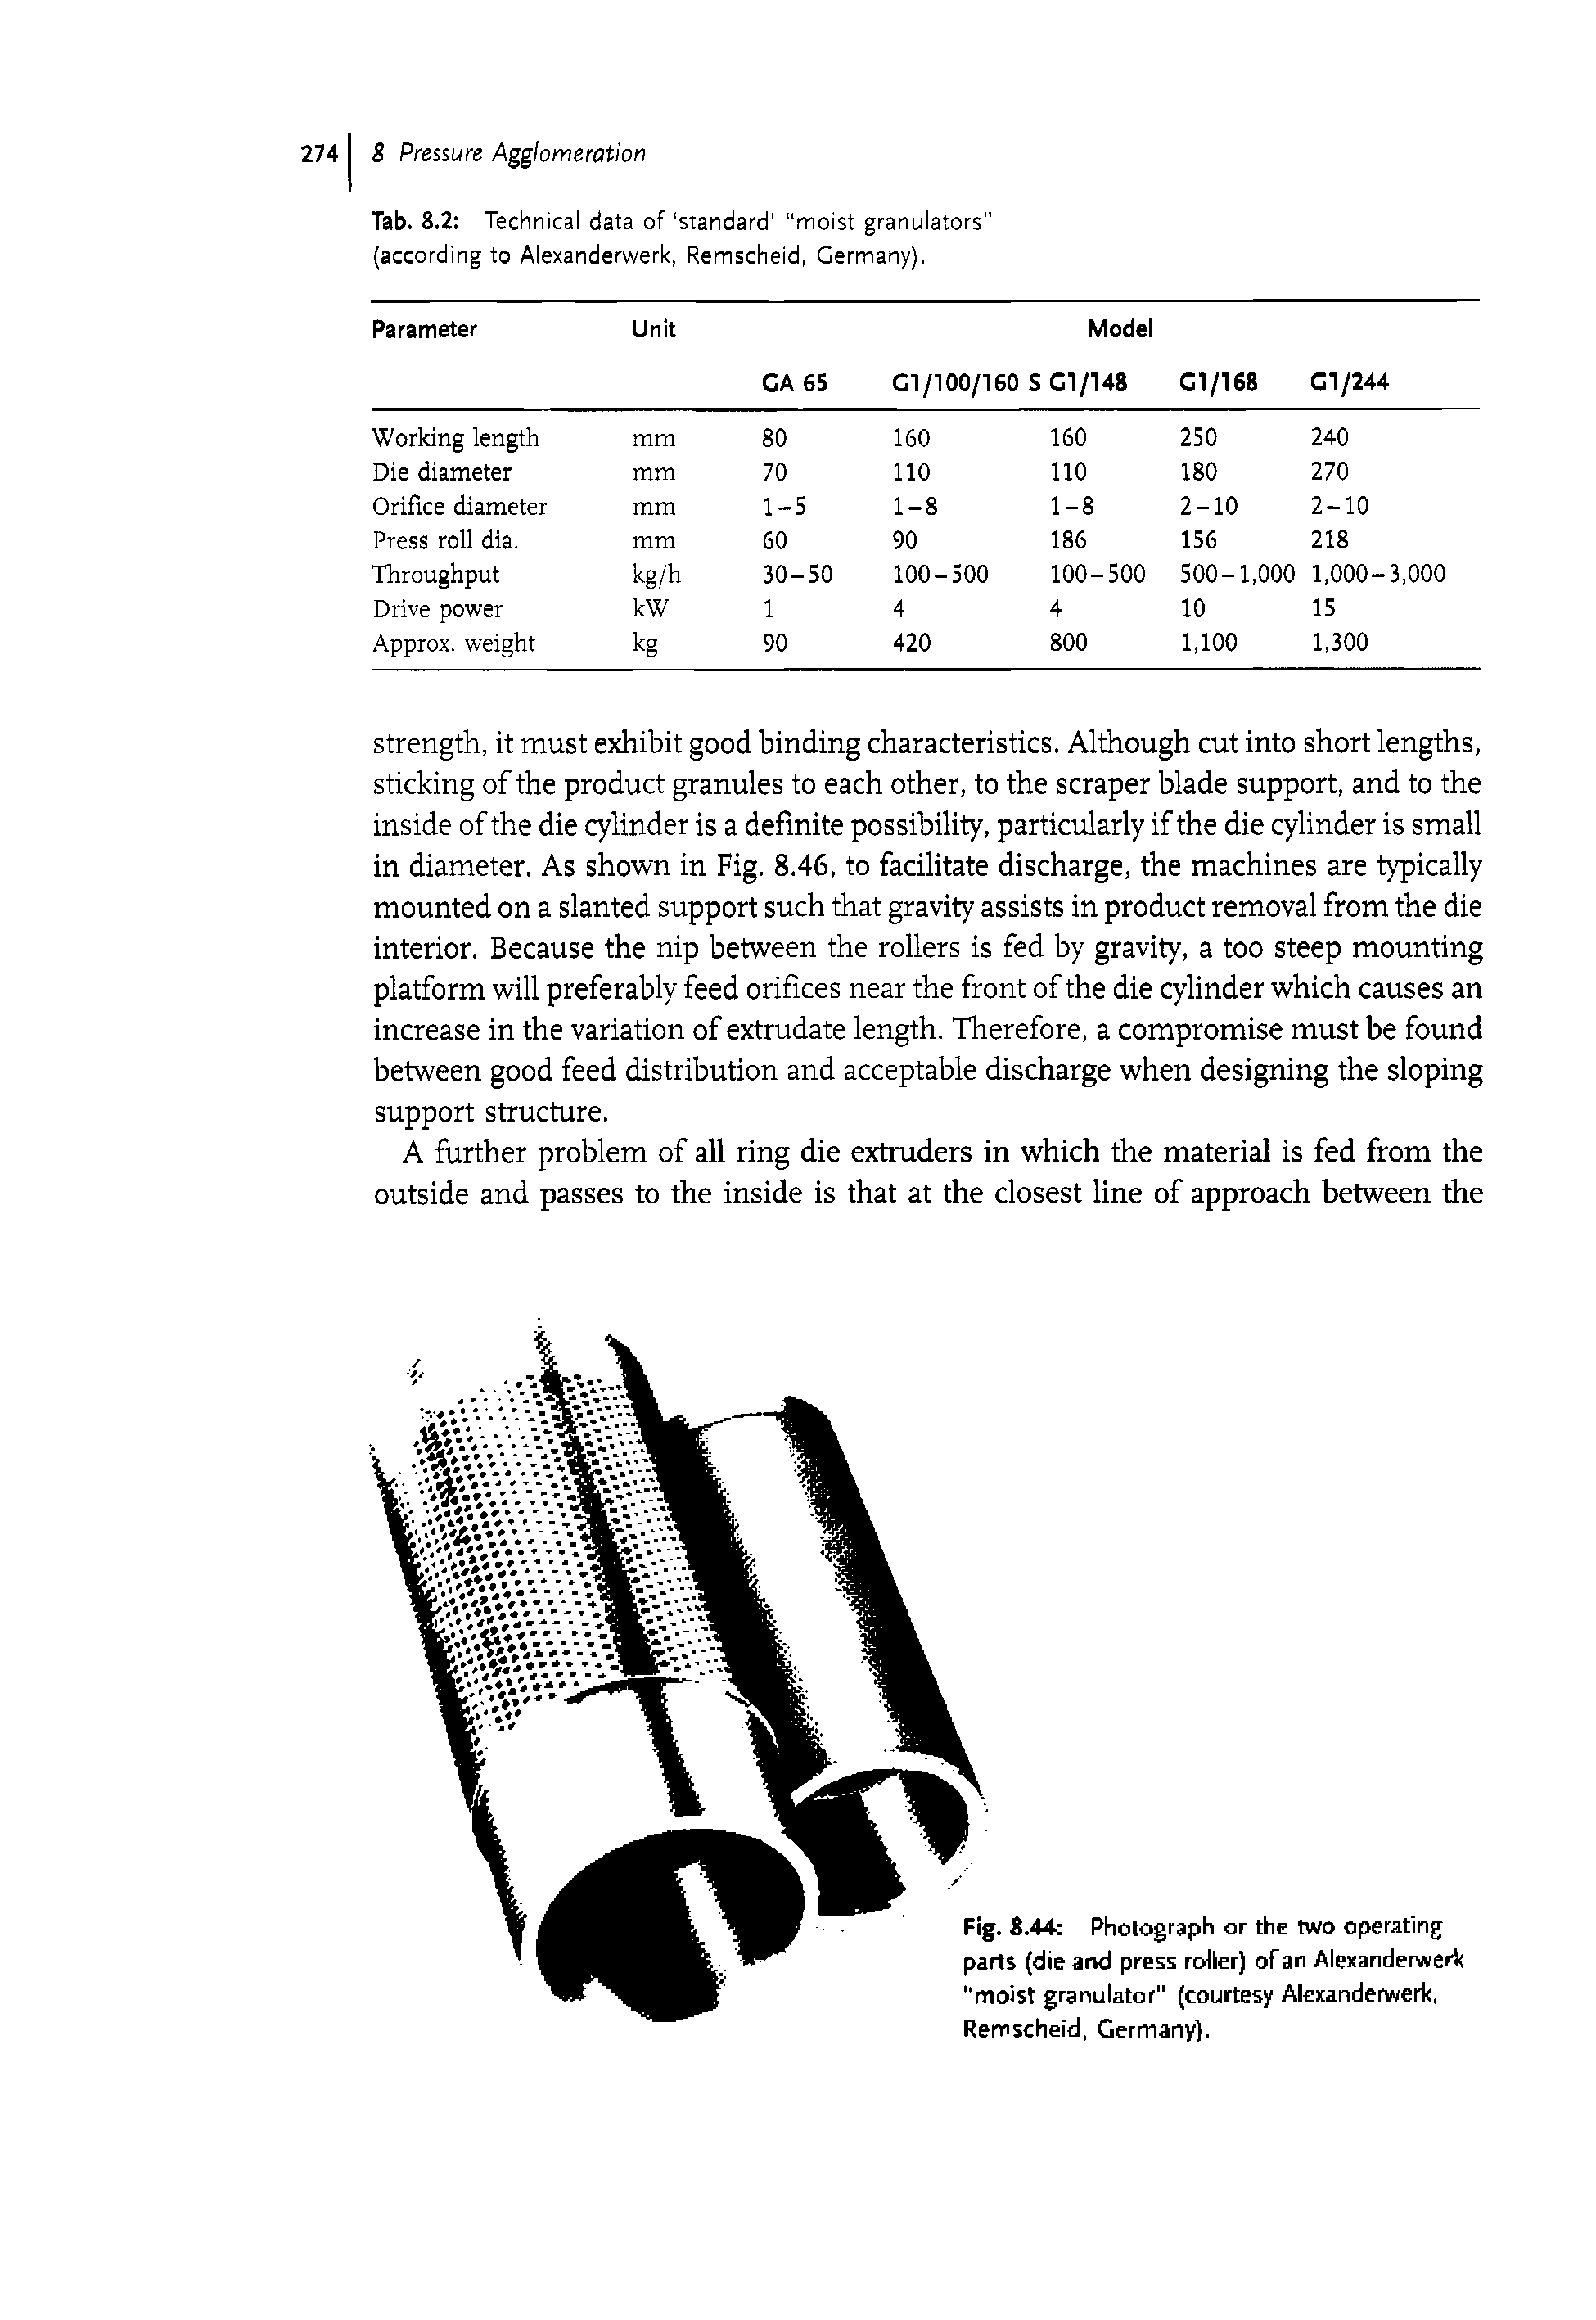 Fig. S.44 Pholograph or the two operating parts (die and press roller) of an Alexanderwerk "moist granulator" (courtesy Alexanderwerk. Remscheid. Germany).